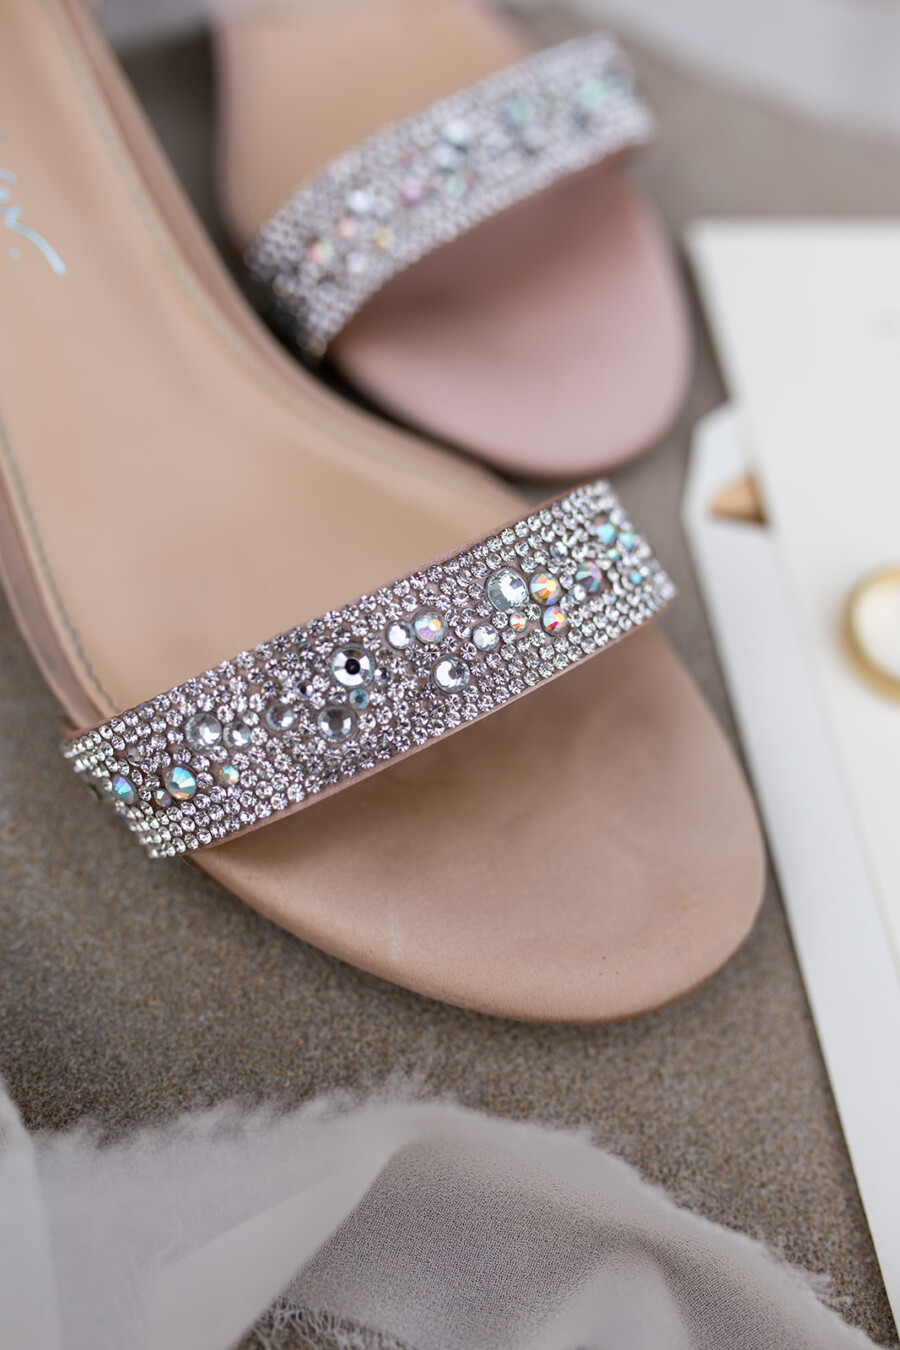 Embellished wedding shoes